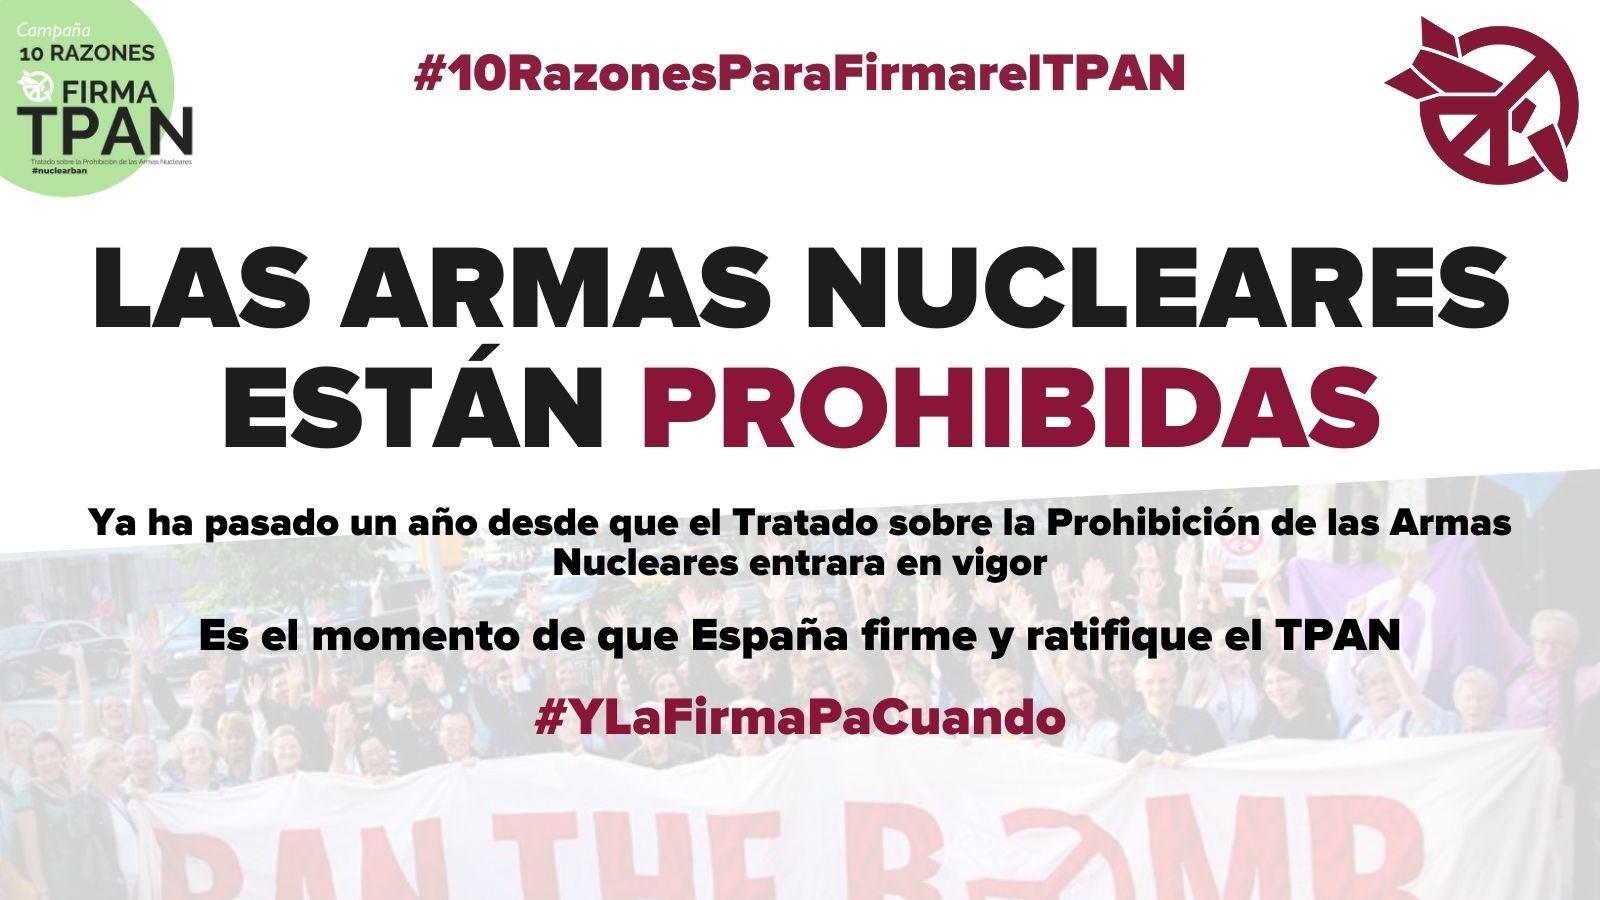 Petició de la Campanya #10RazonesFirmaTPAN al Govern espanyol